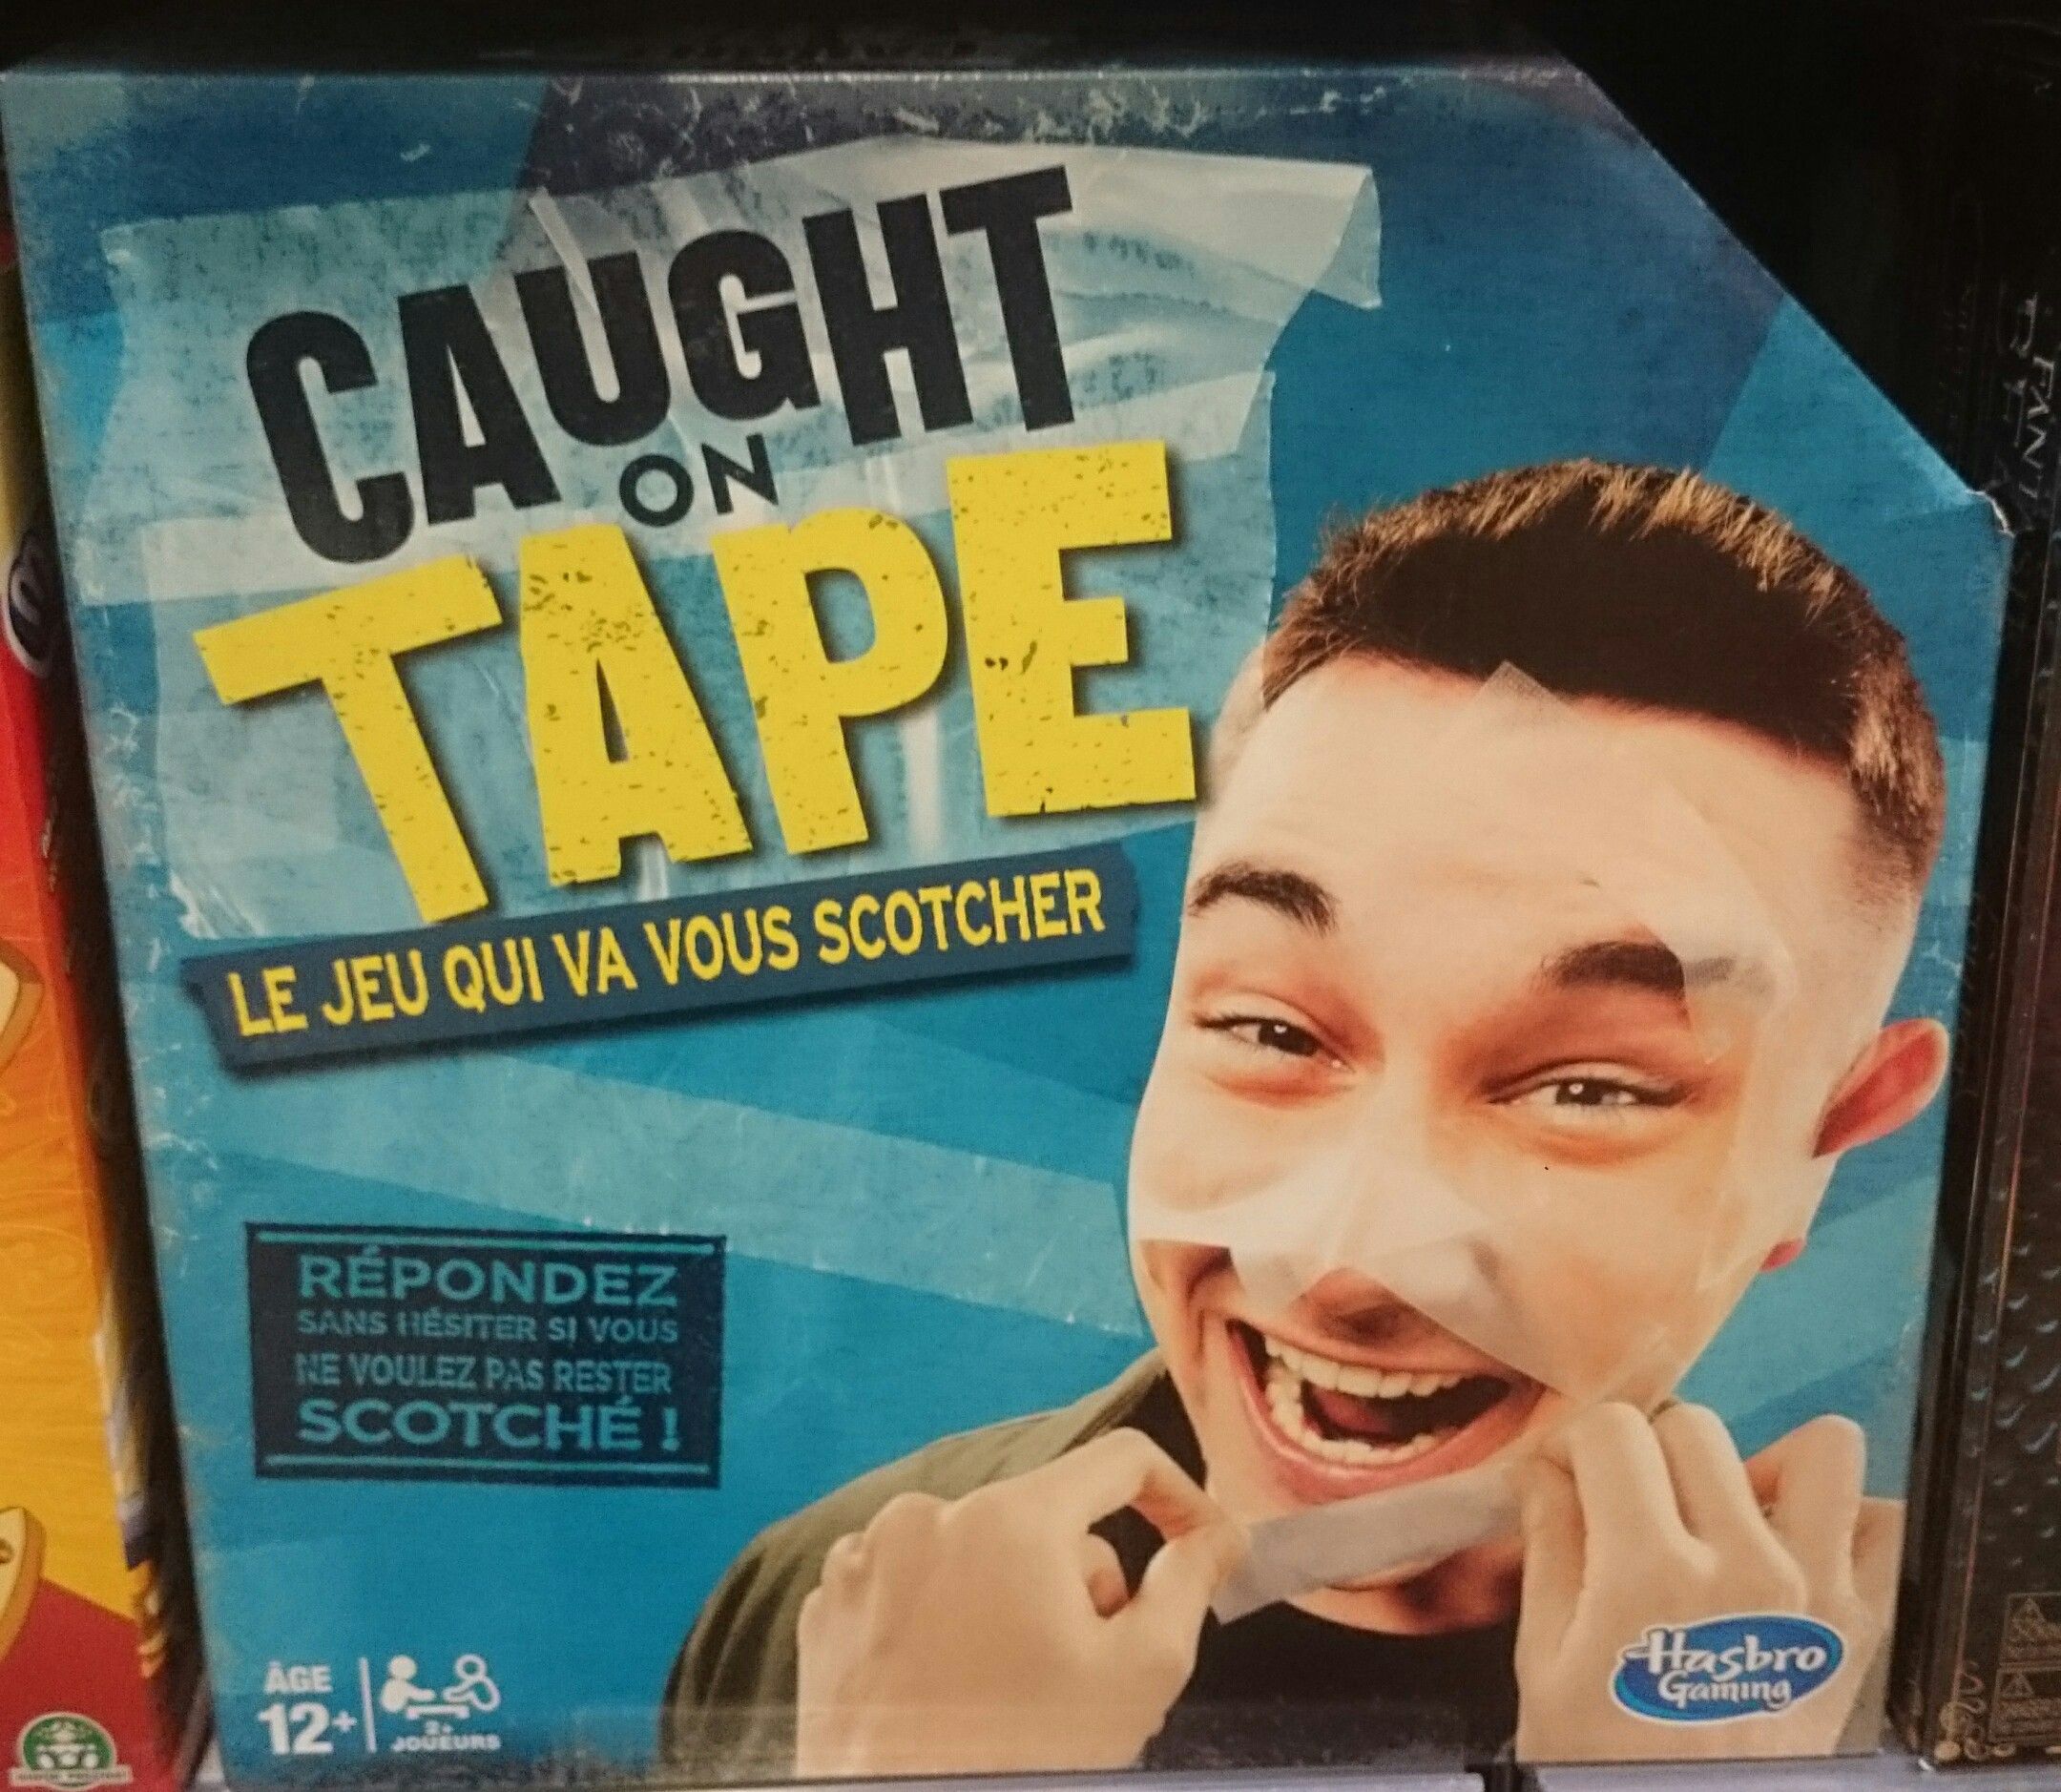 Caught on tape